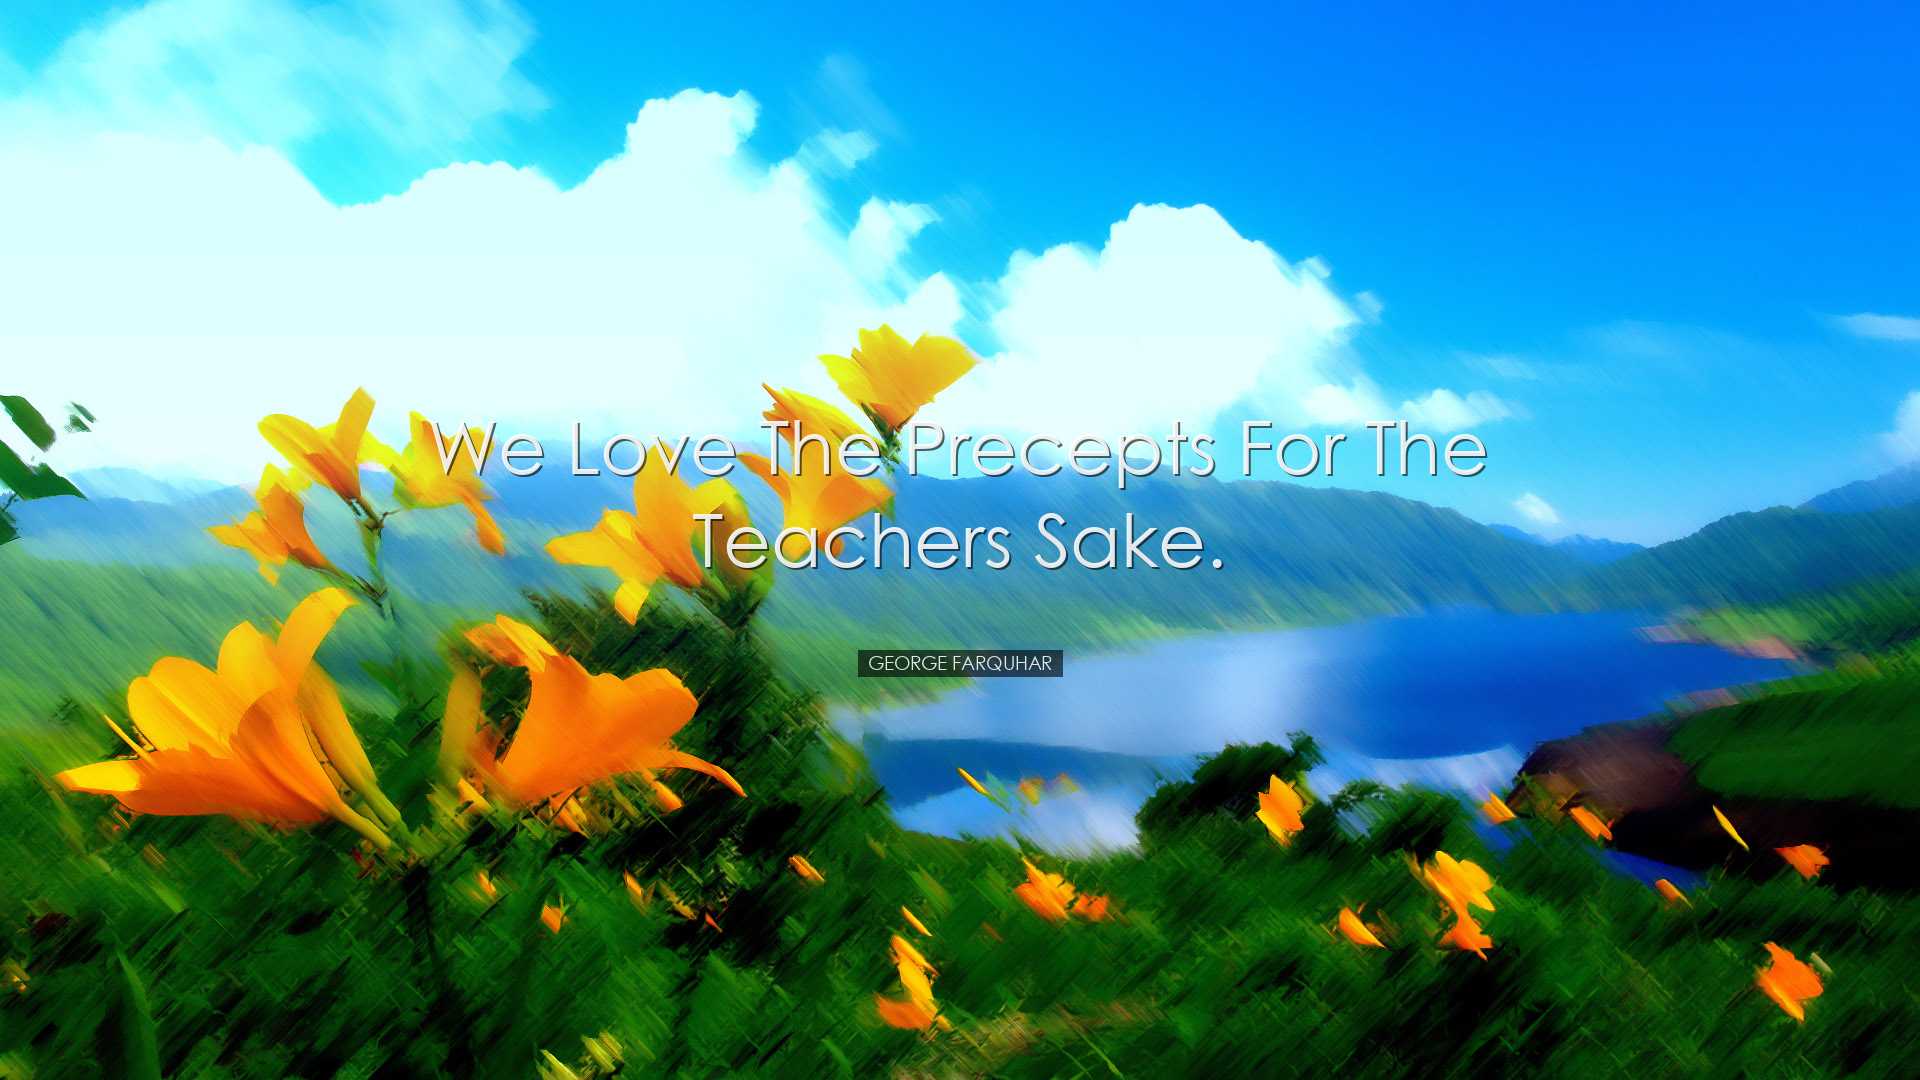 We love the precepts for the teachers sake. - George Farquhar